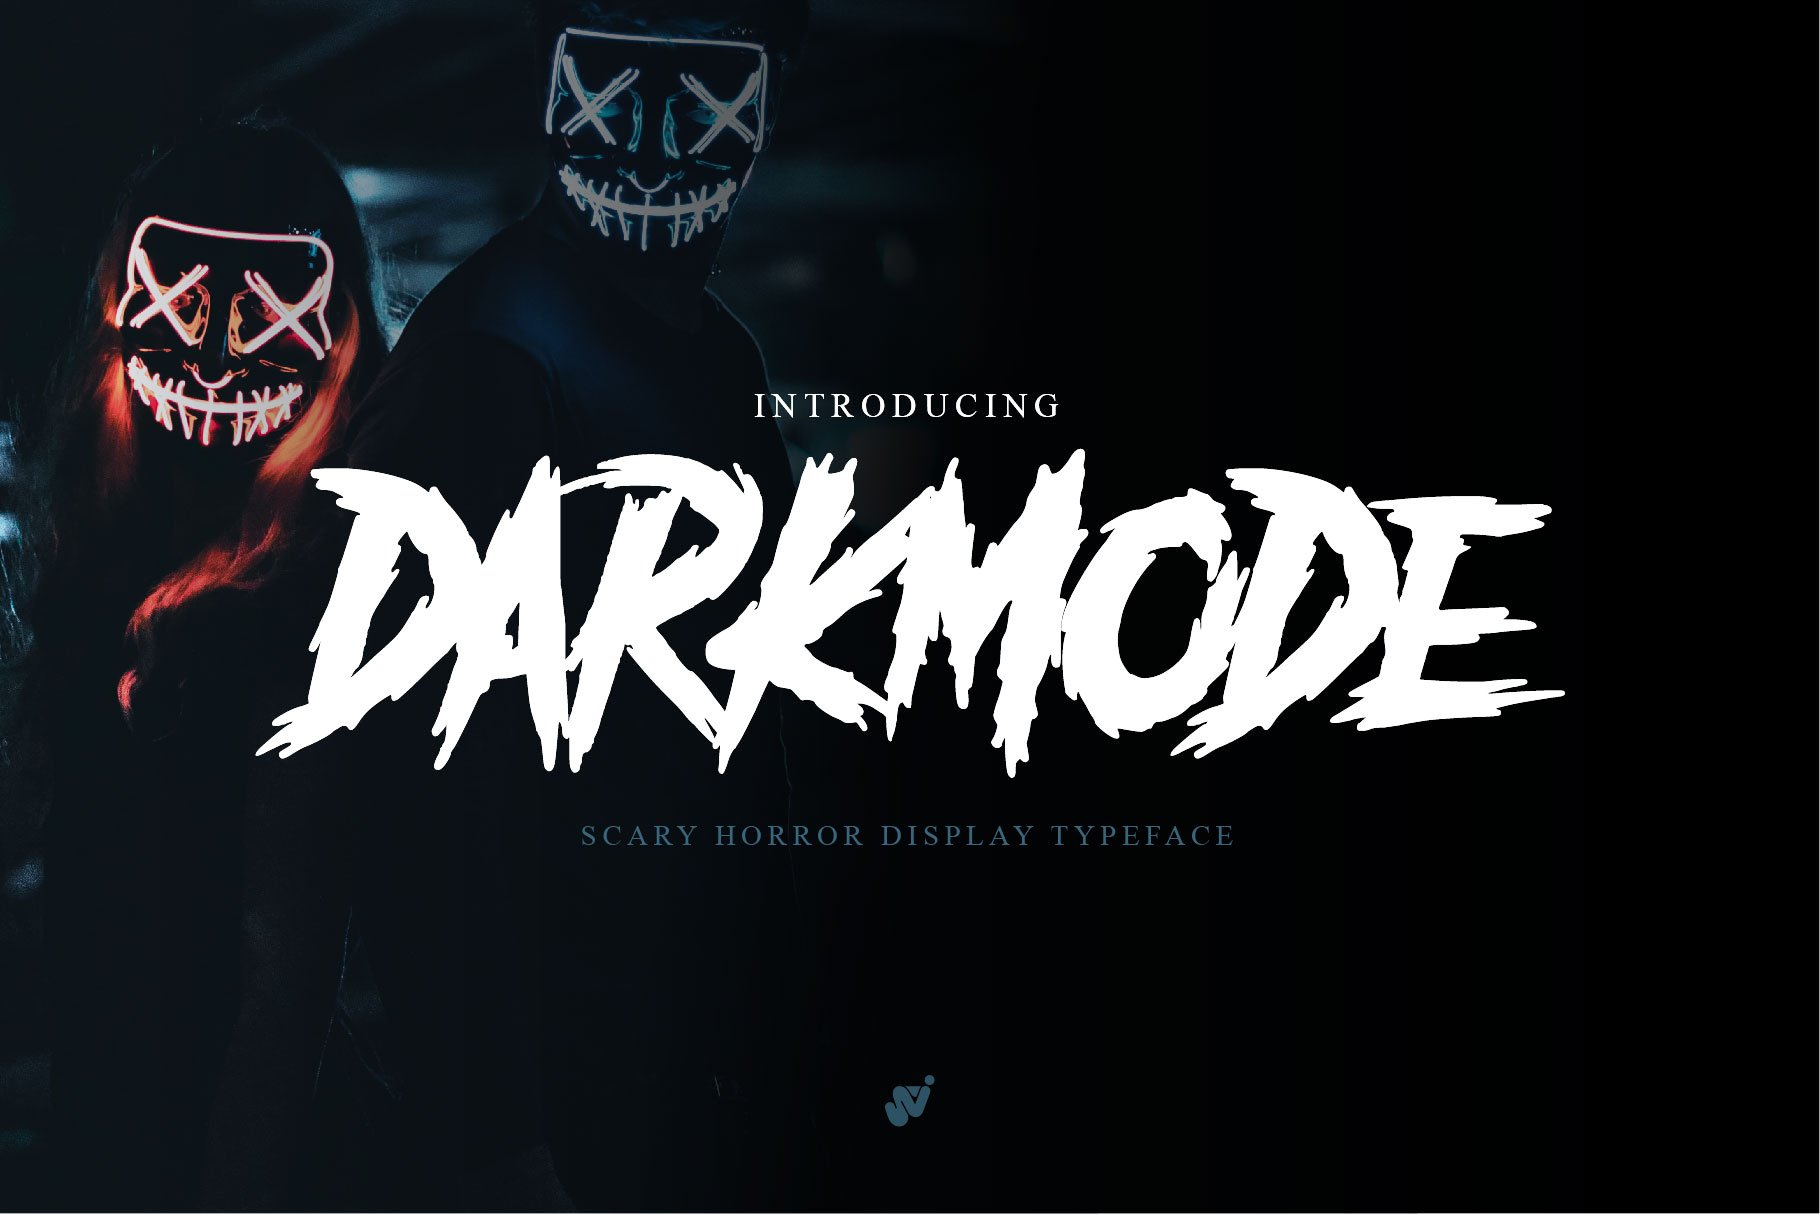 Darkmode – Horror Gothic Typeface cover image.